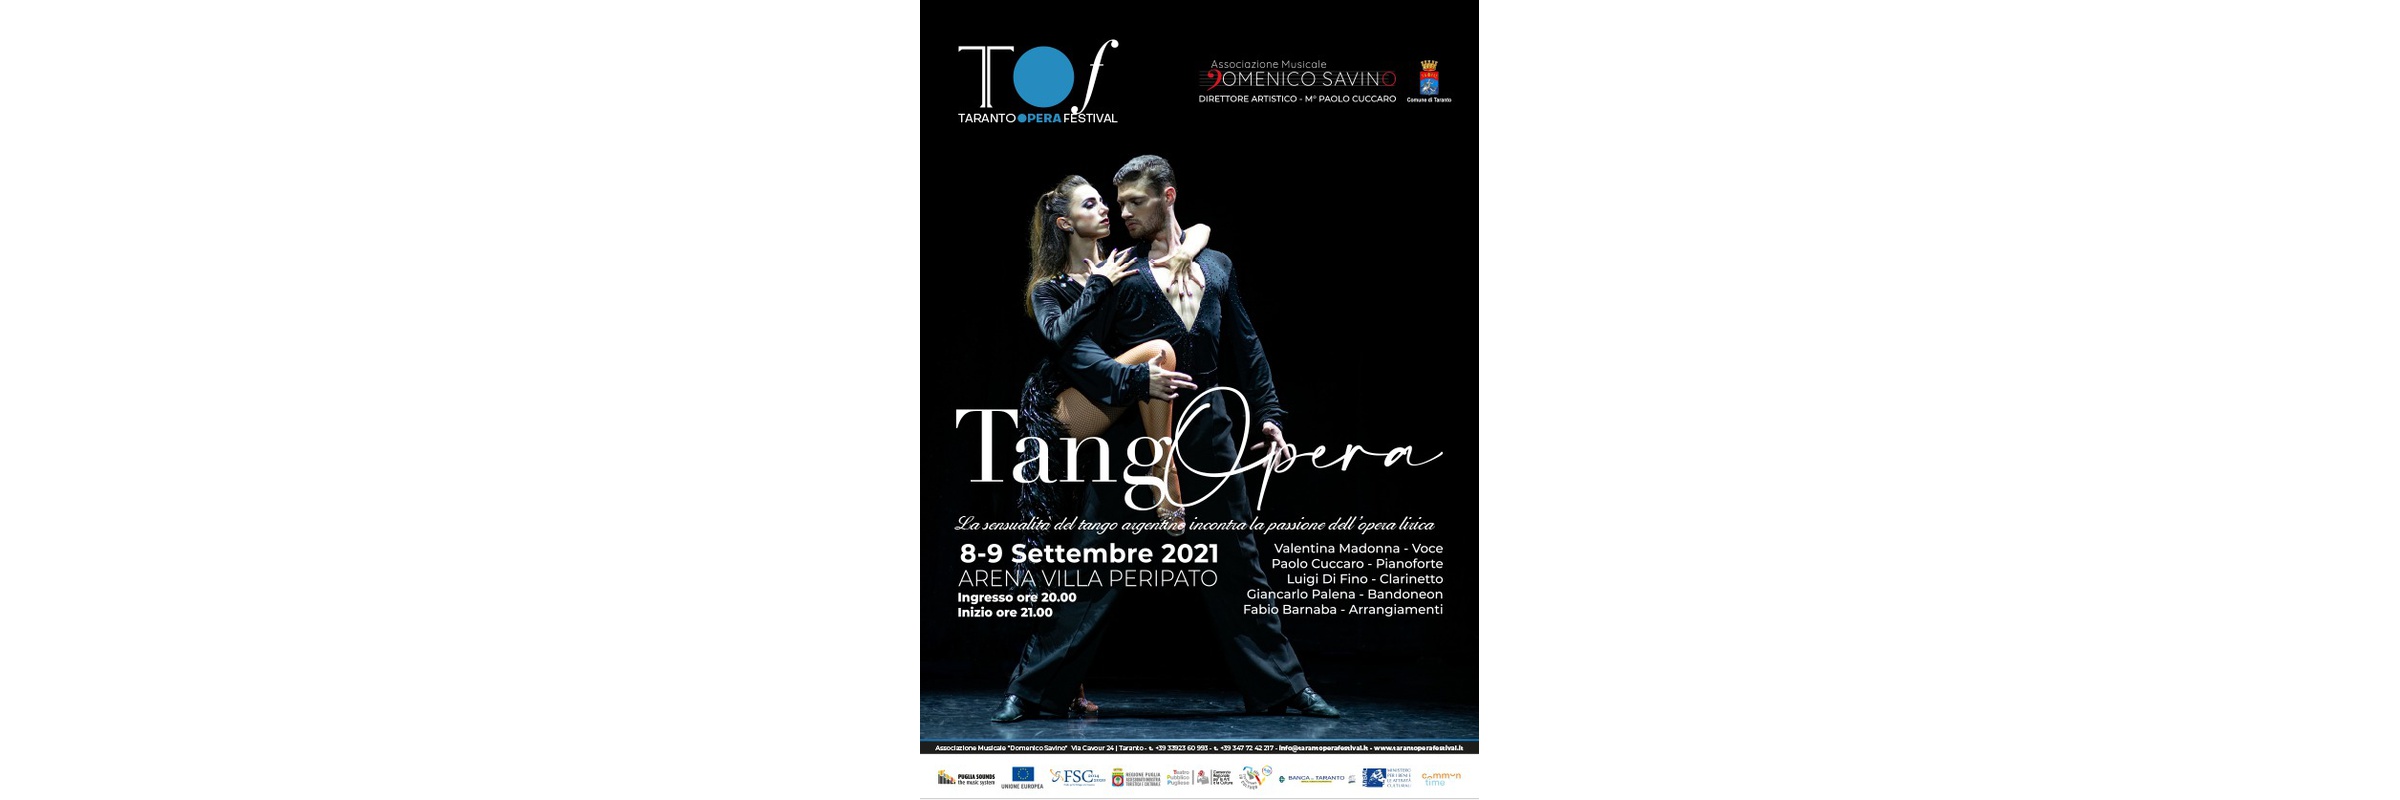 Musical Association Domenico Savino - Tango 